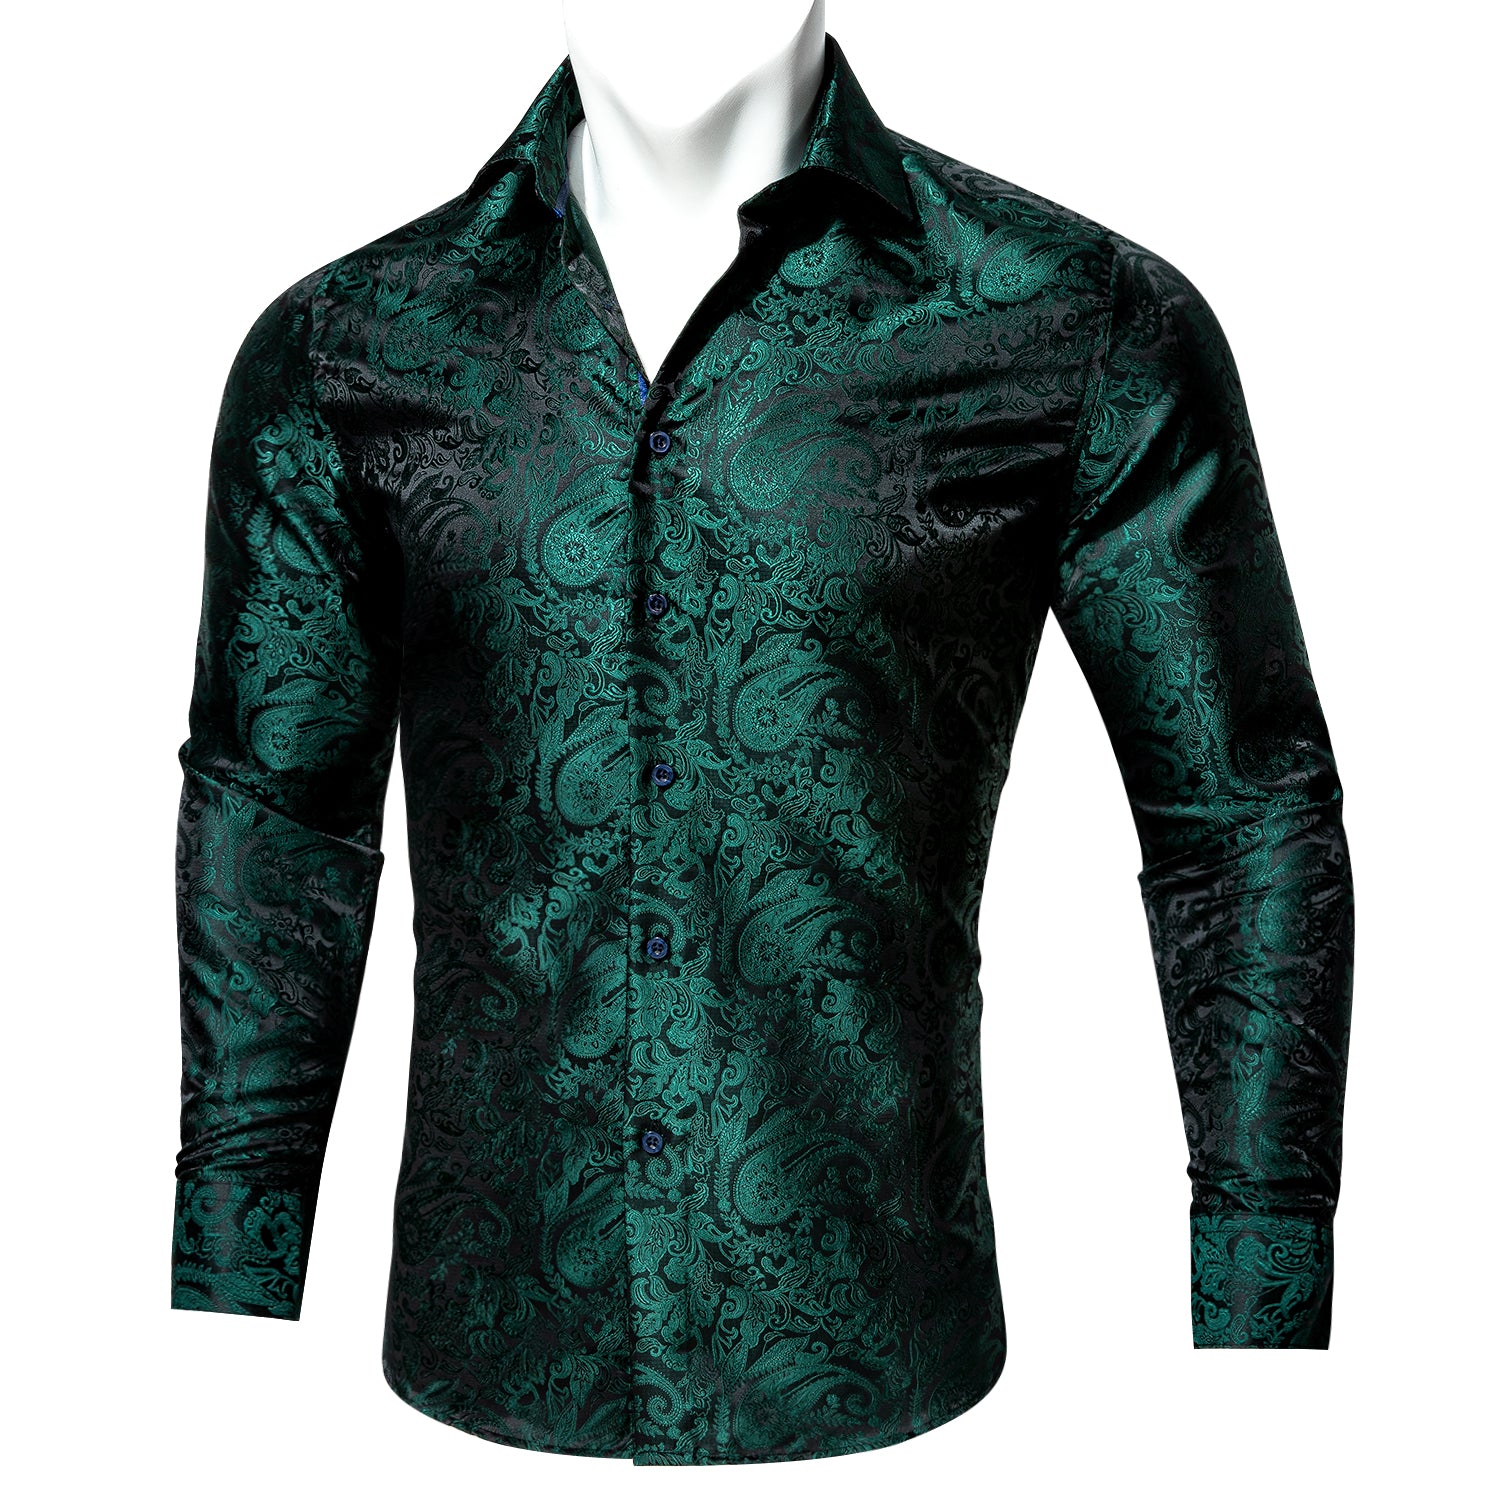 Barry.wang Button Down Shirt Green Solid Silk Shirt for Men Classic